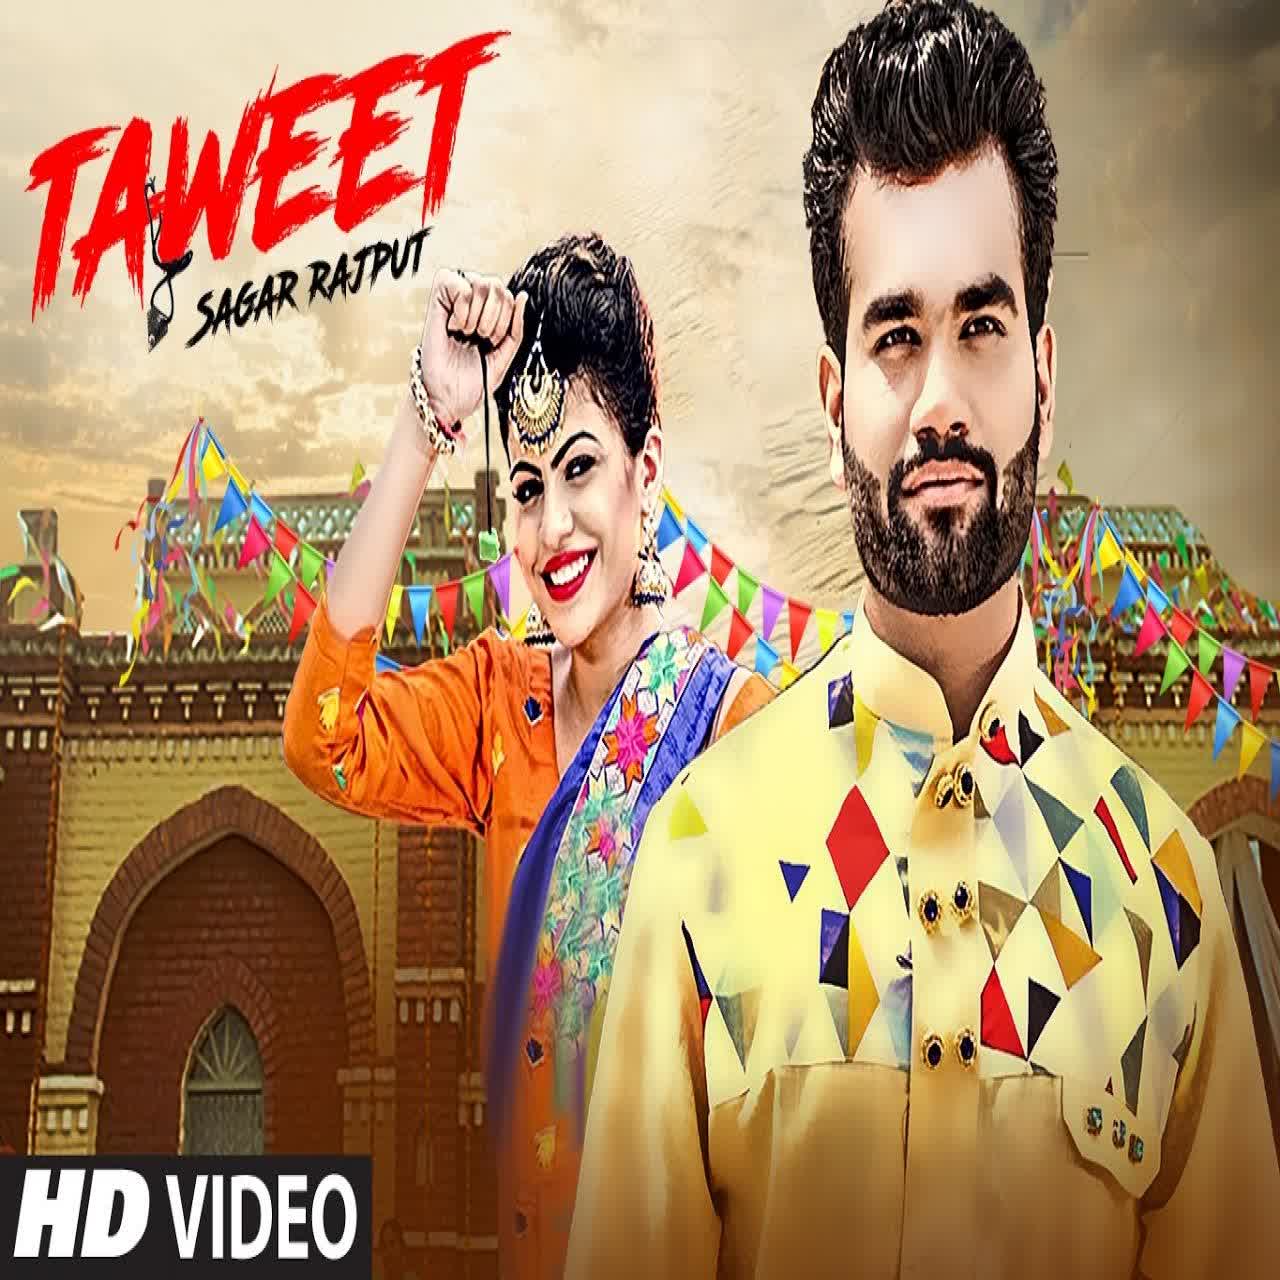 Taweet Sagar Rajput  Mp3 song download